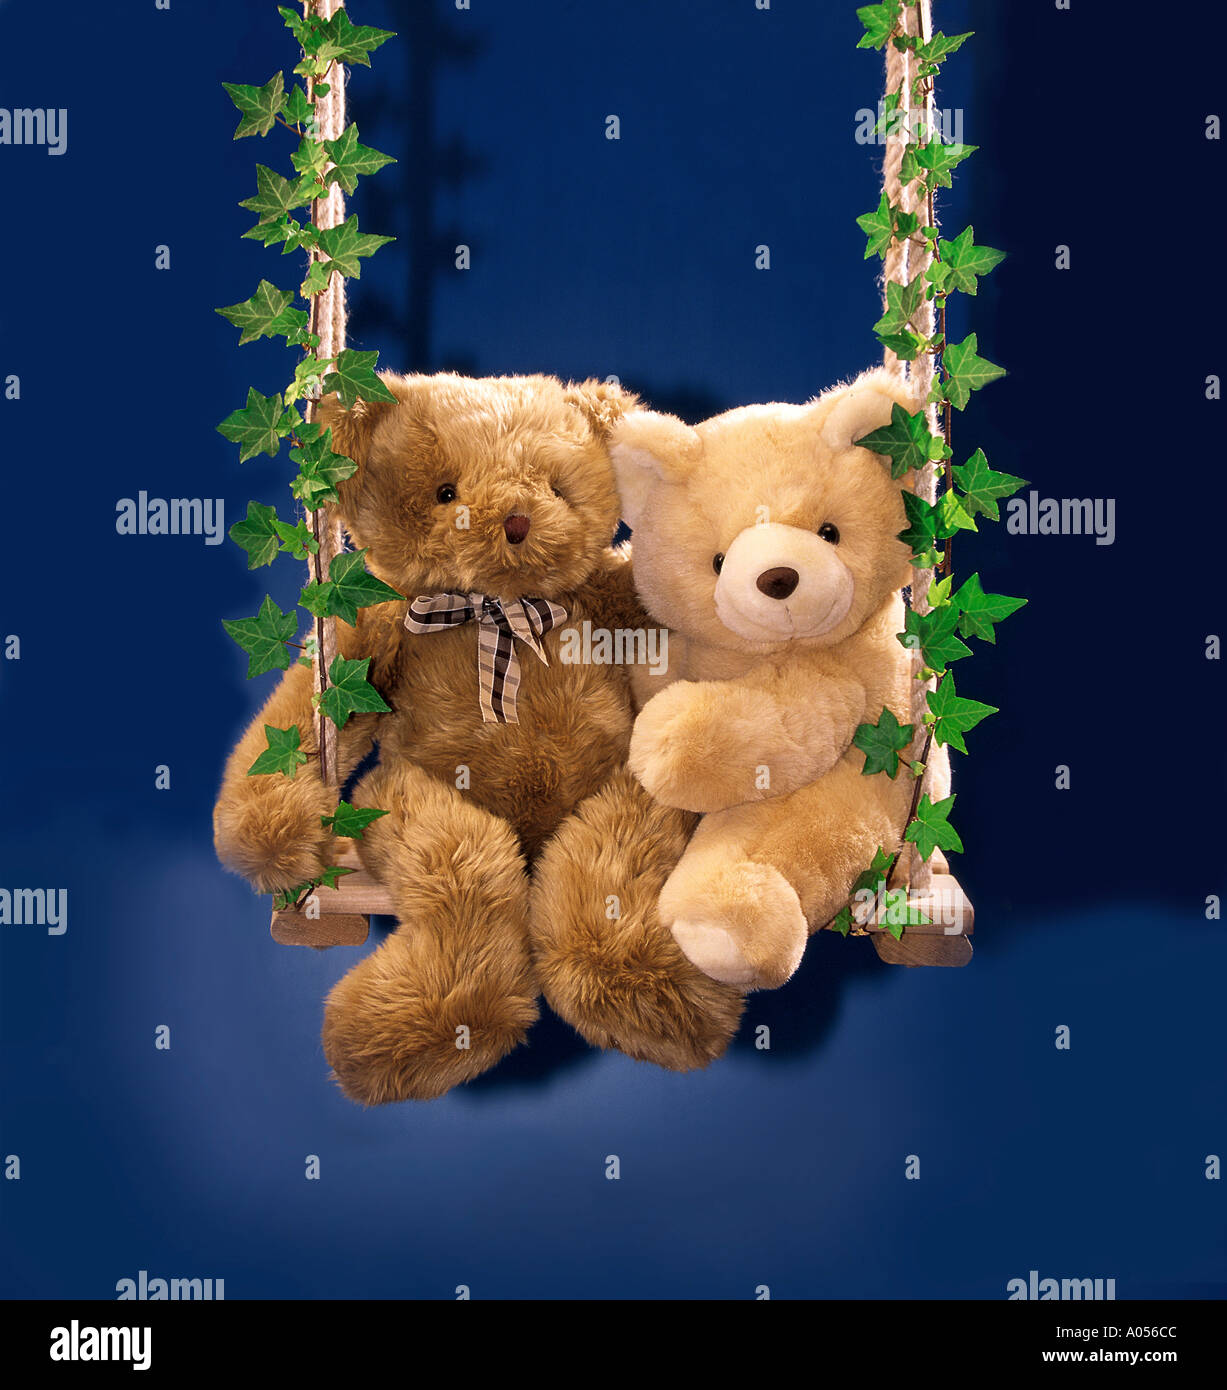 teddy bears in love tender sweet cute Stock Photo - Alamy